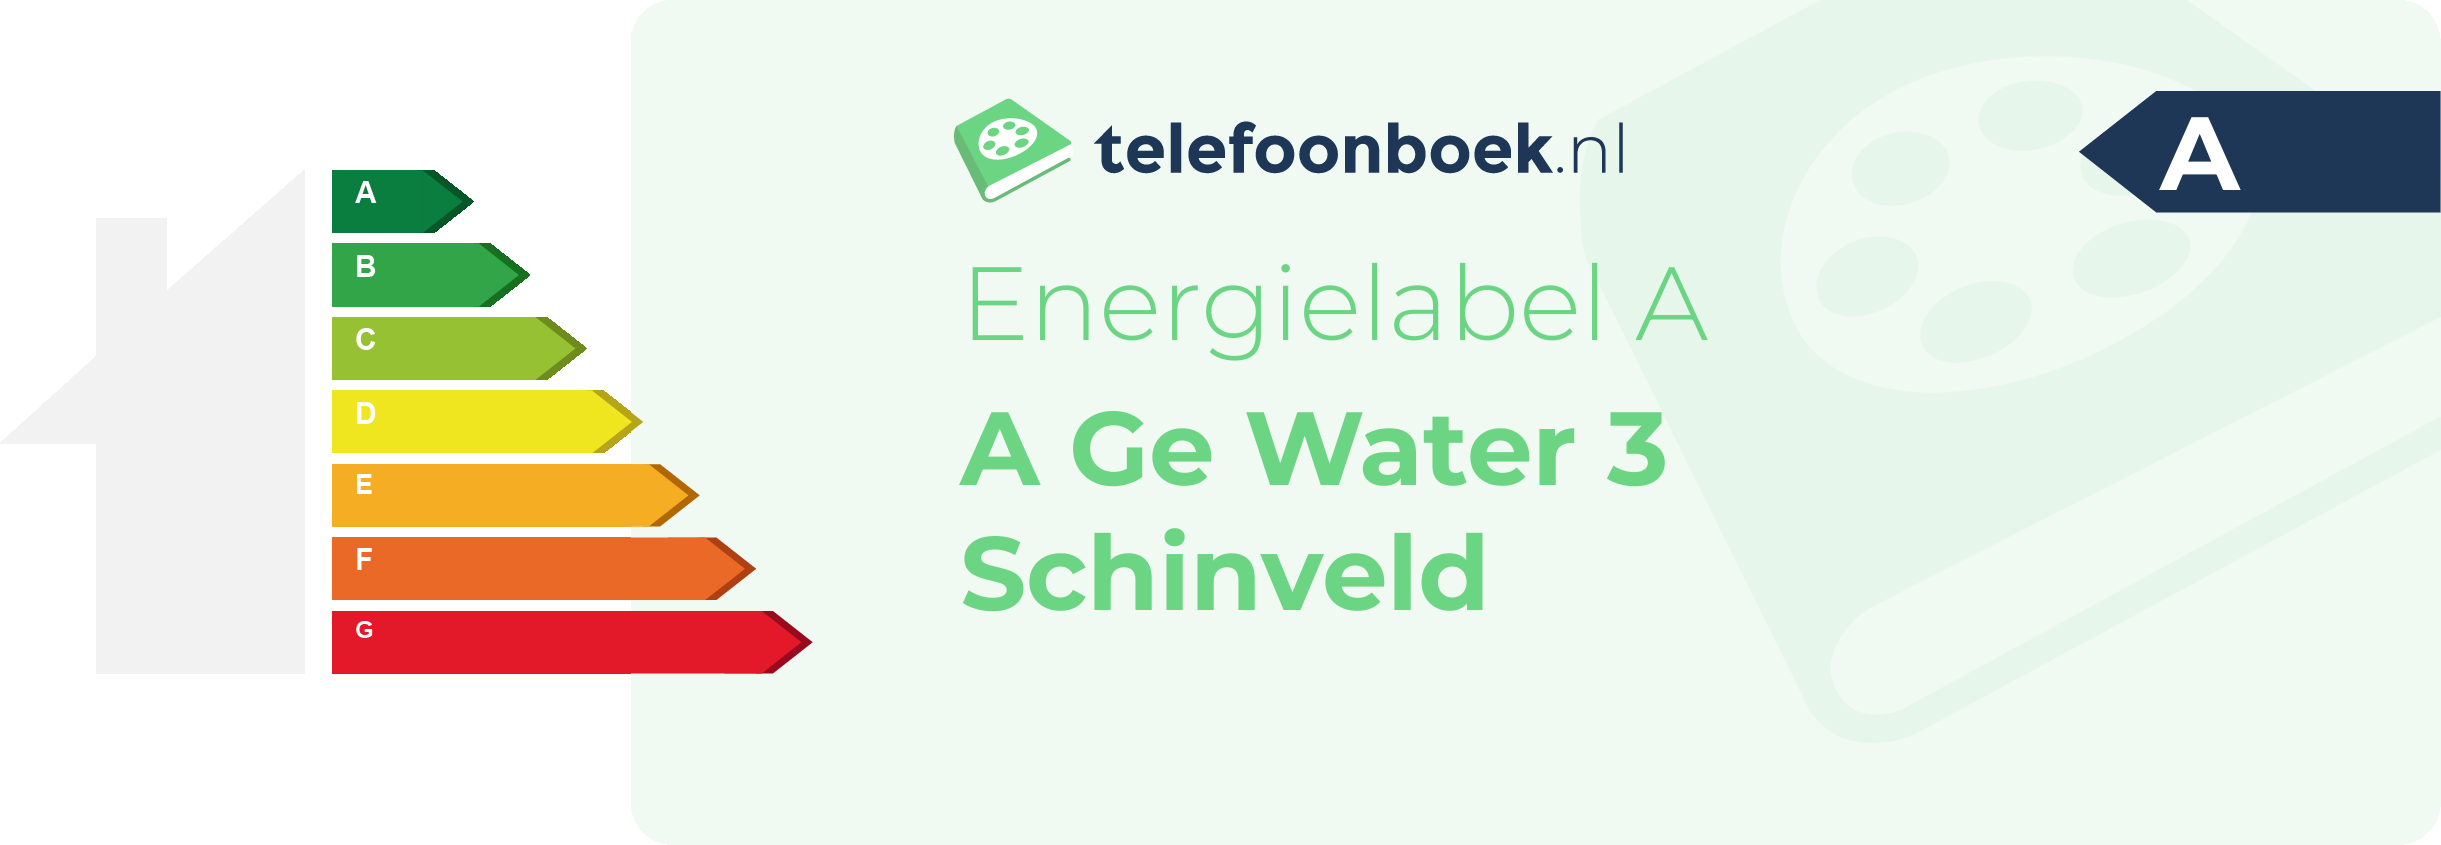 Energielabel A Ge Water 3 Schinveld